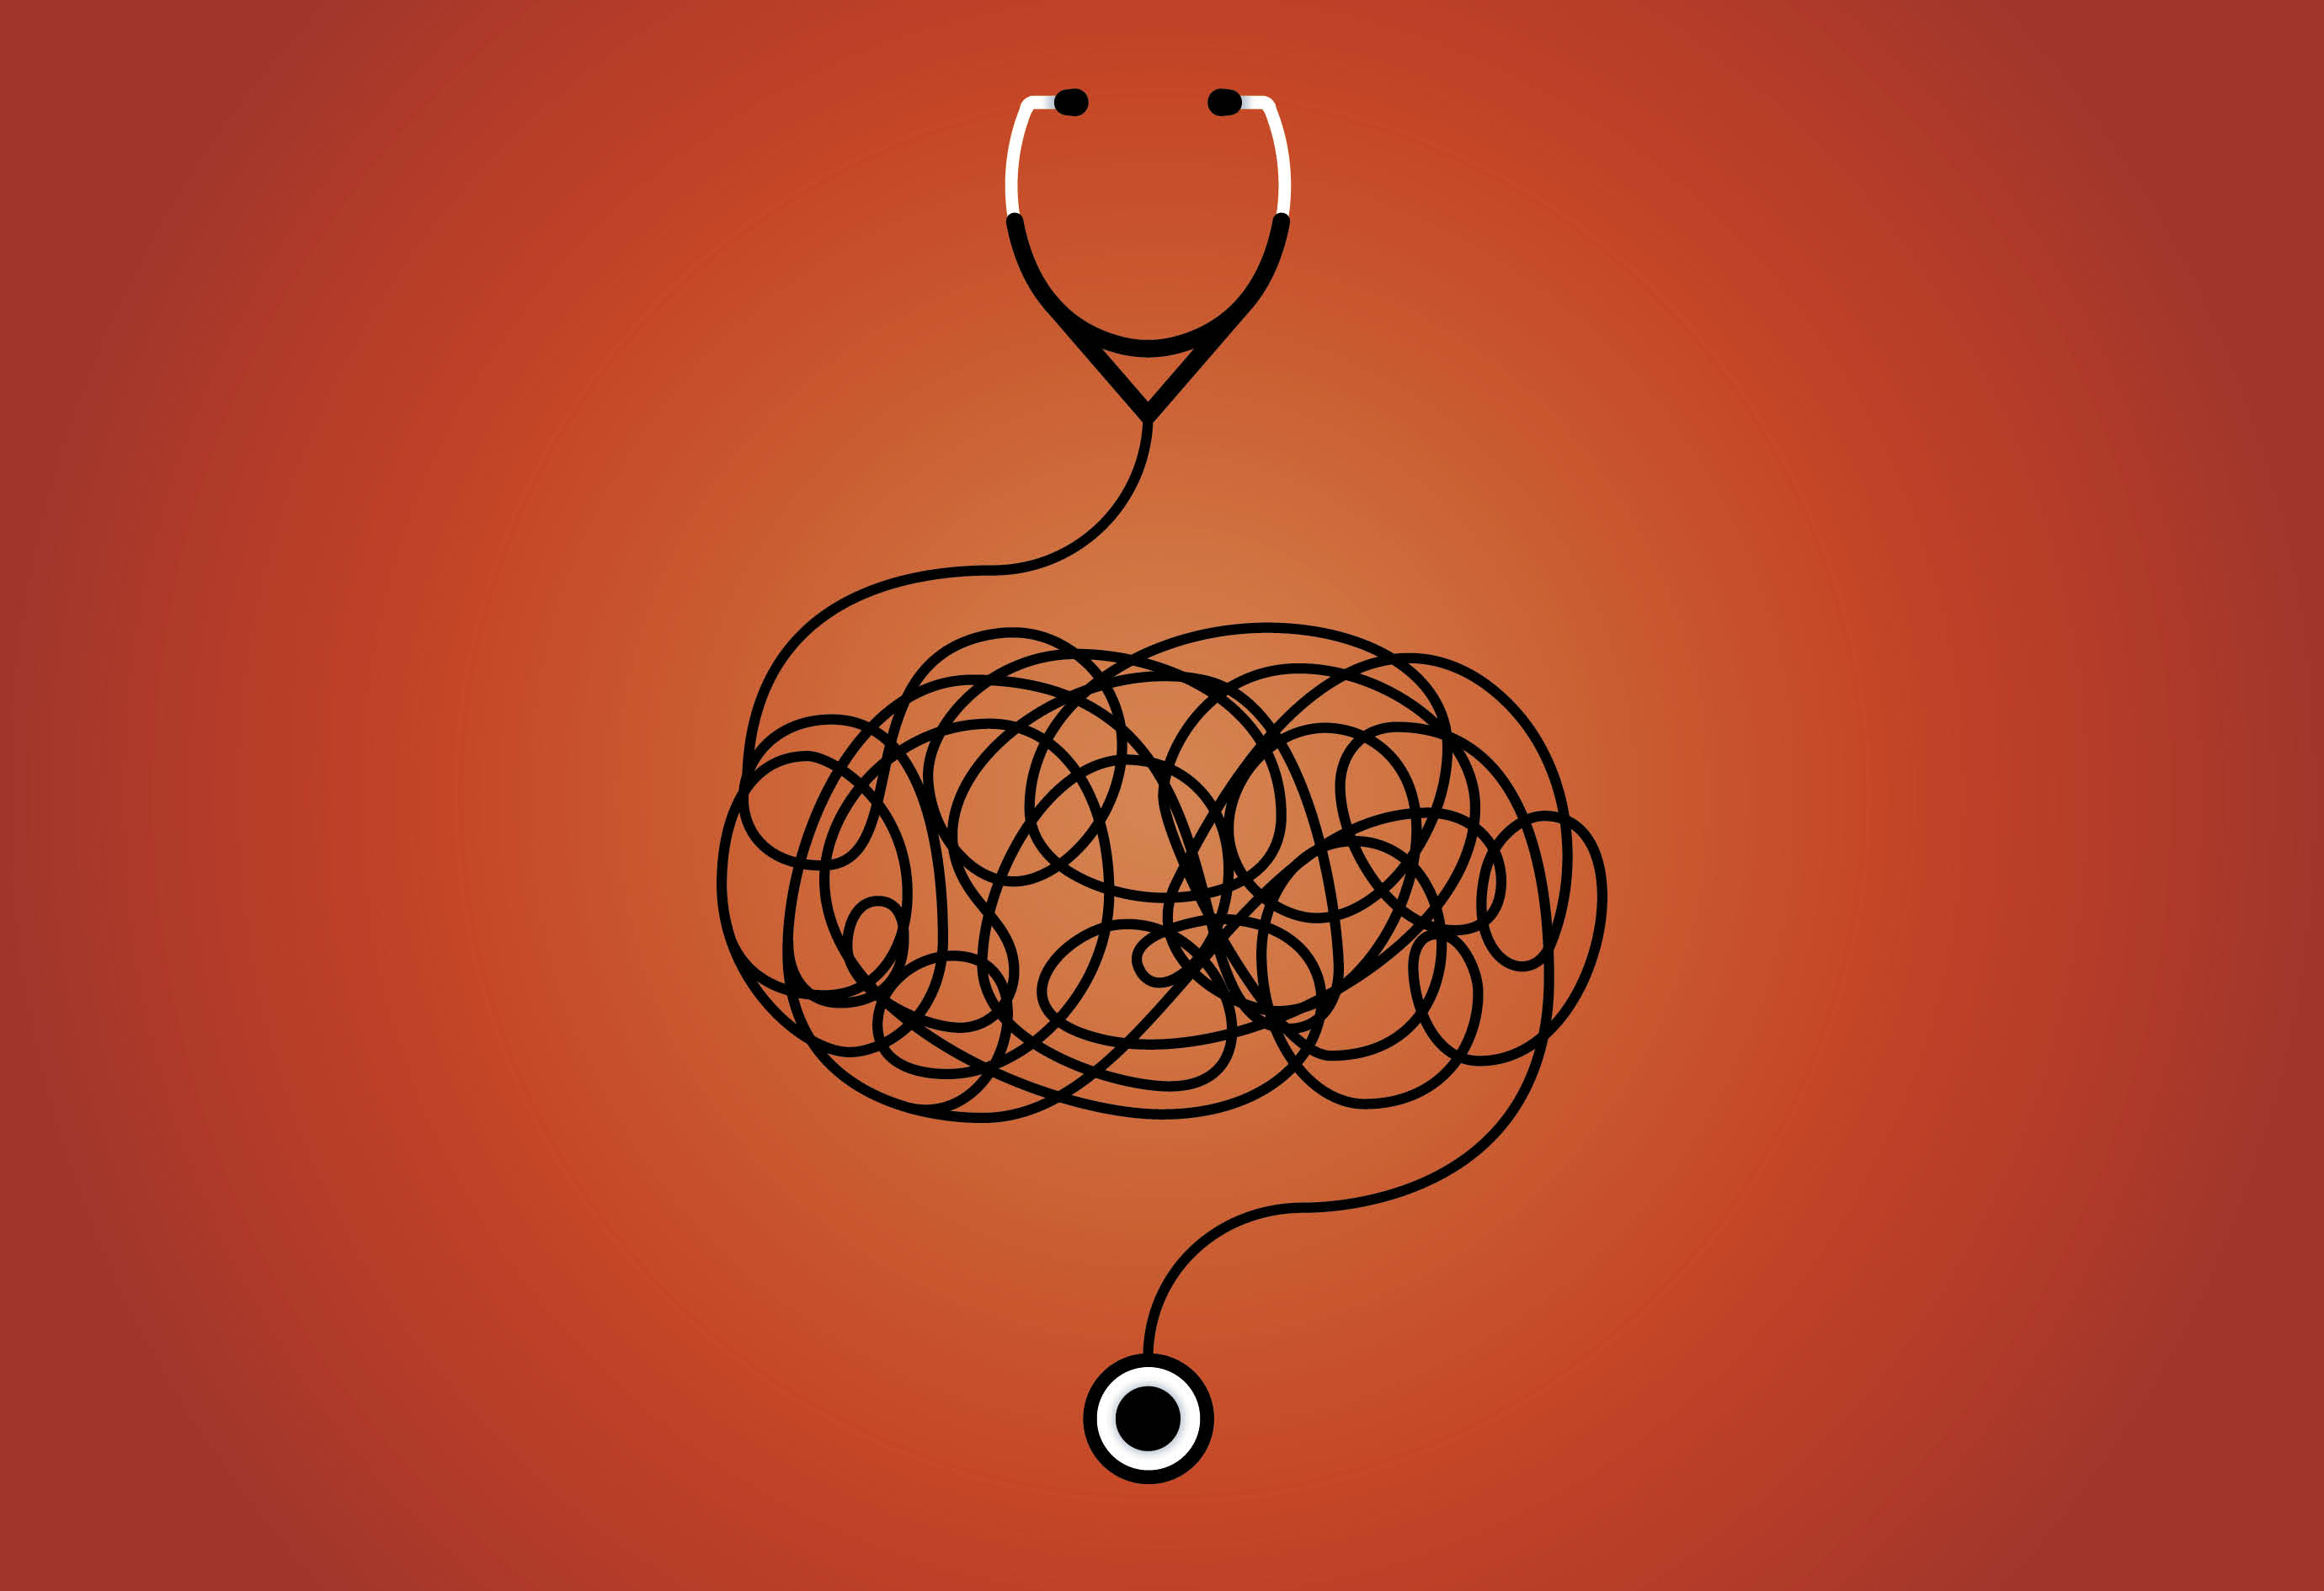 Illustration of a jumbled stethoscope on an orange gradient background